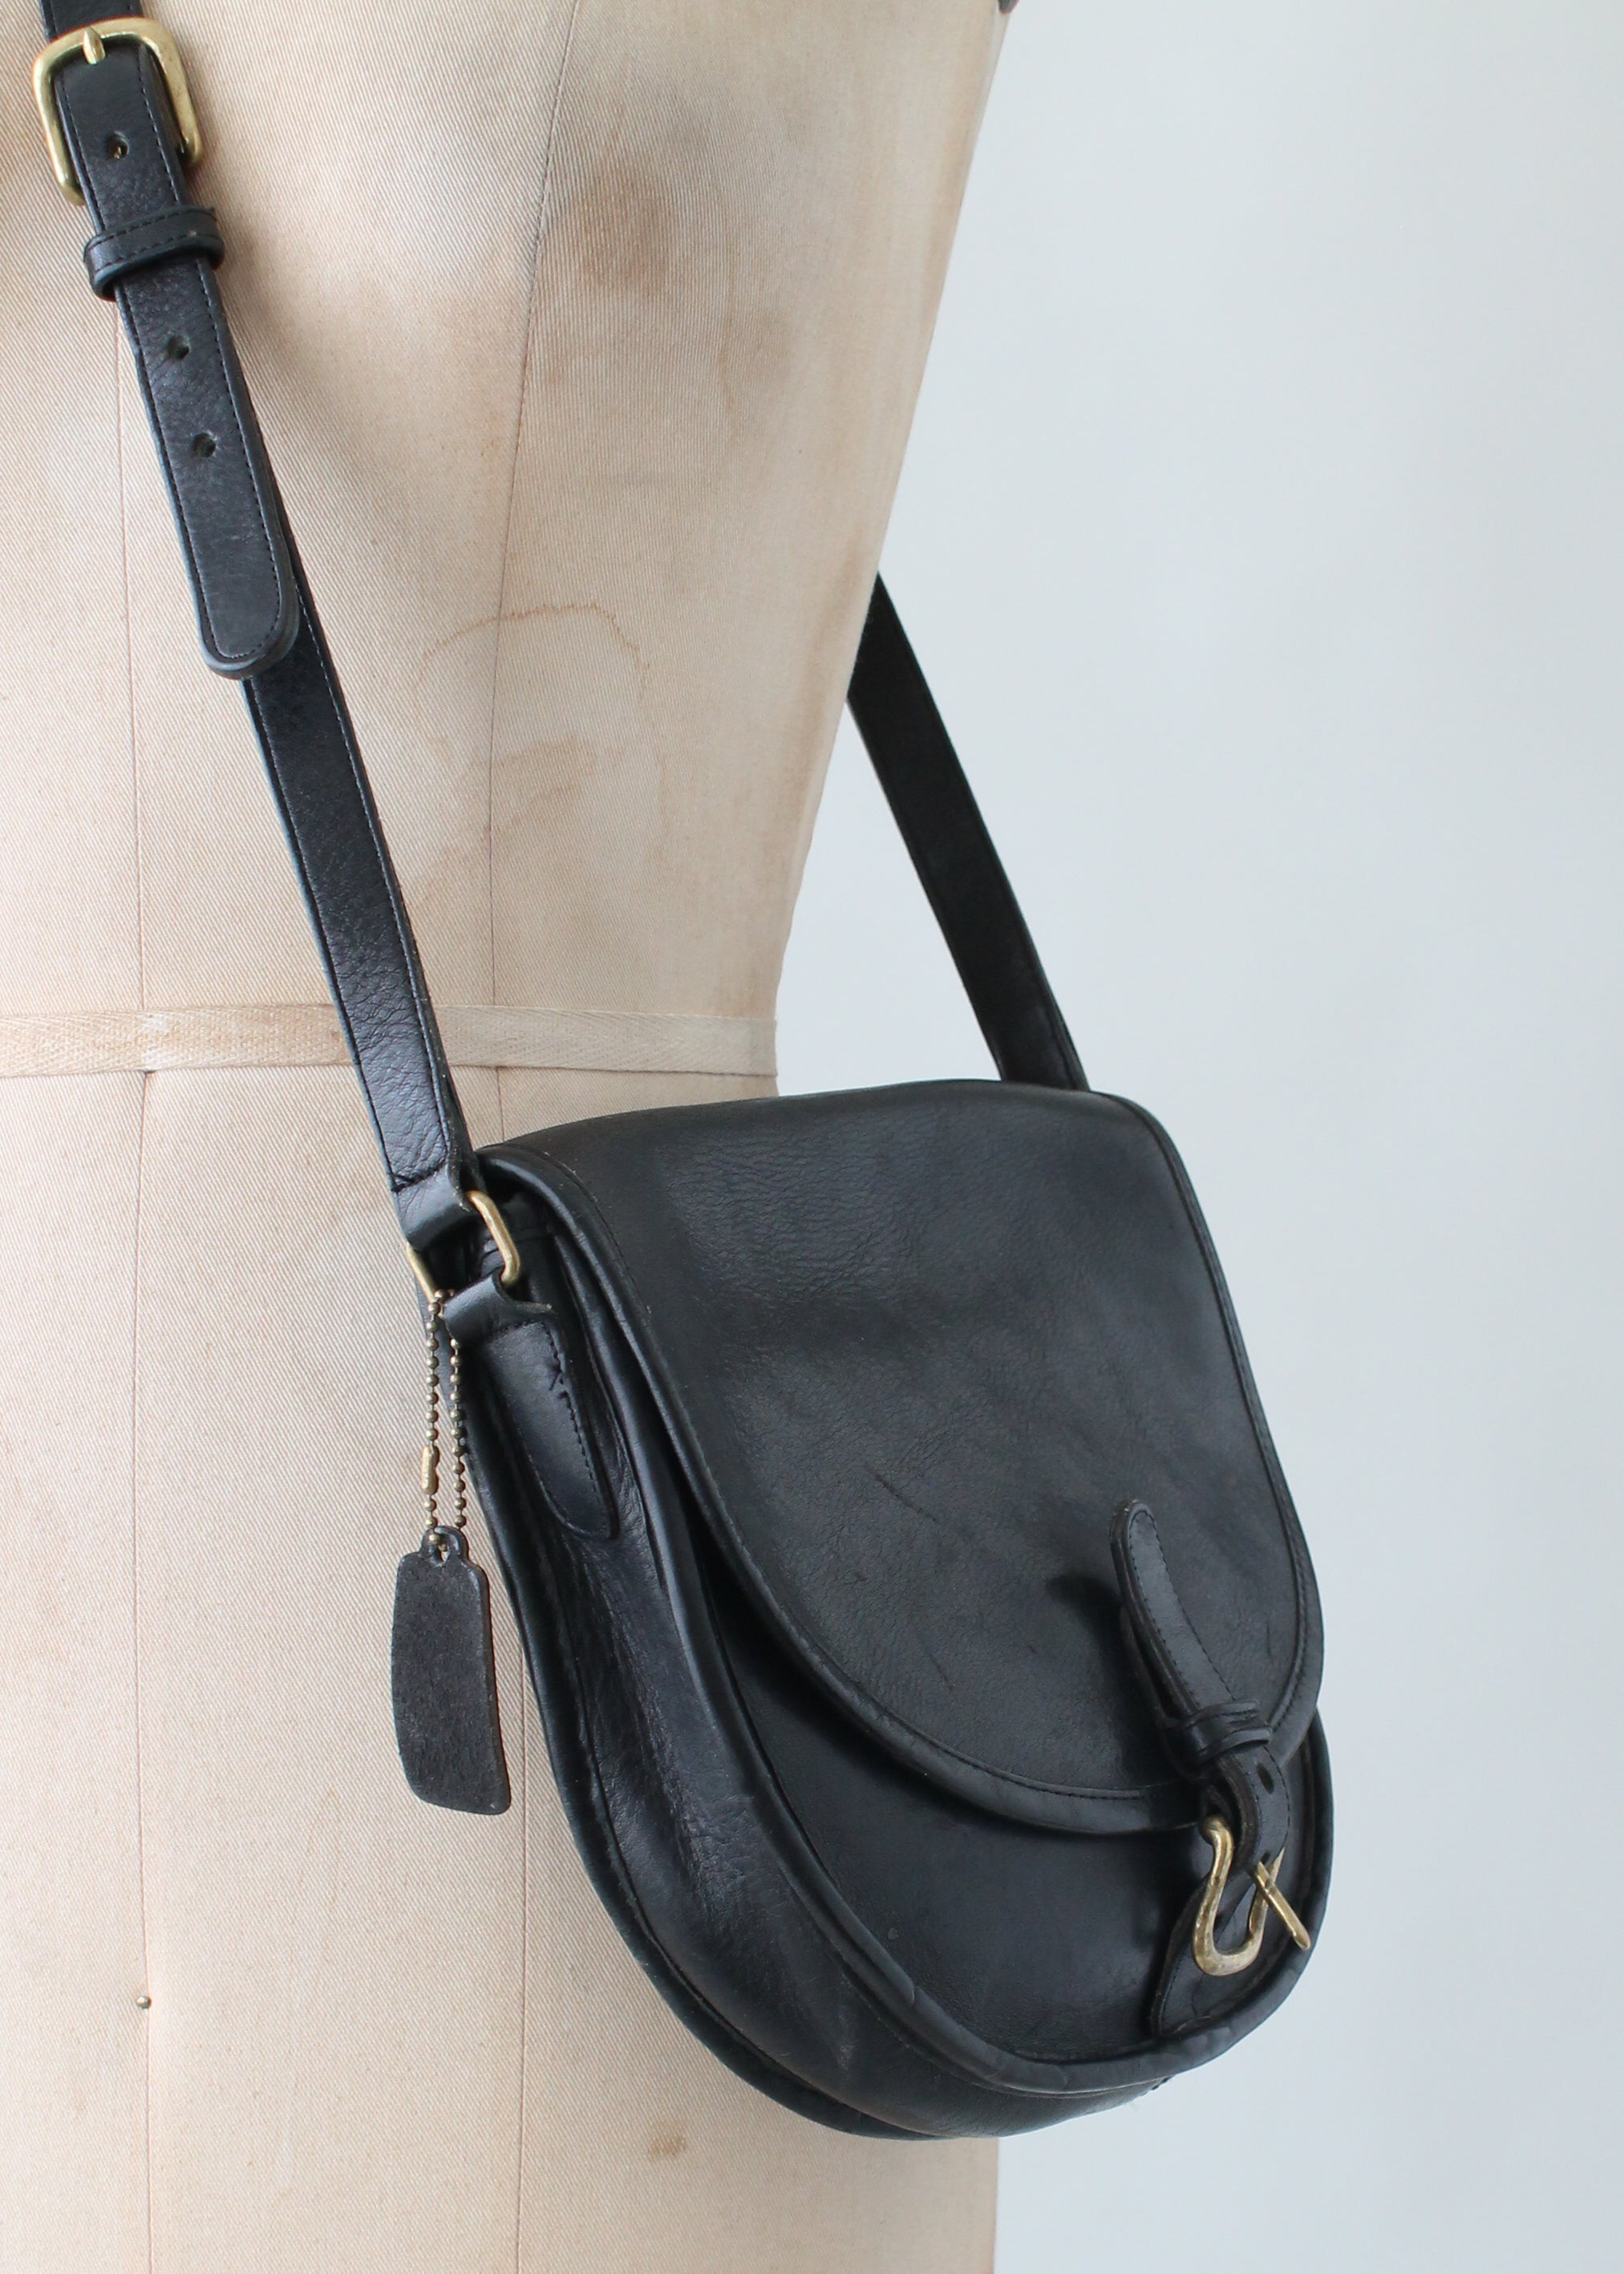 Vintage COACH buckle bag - Black